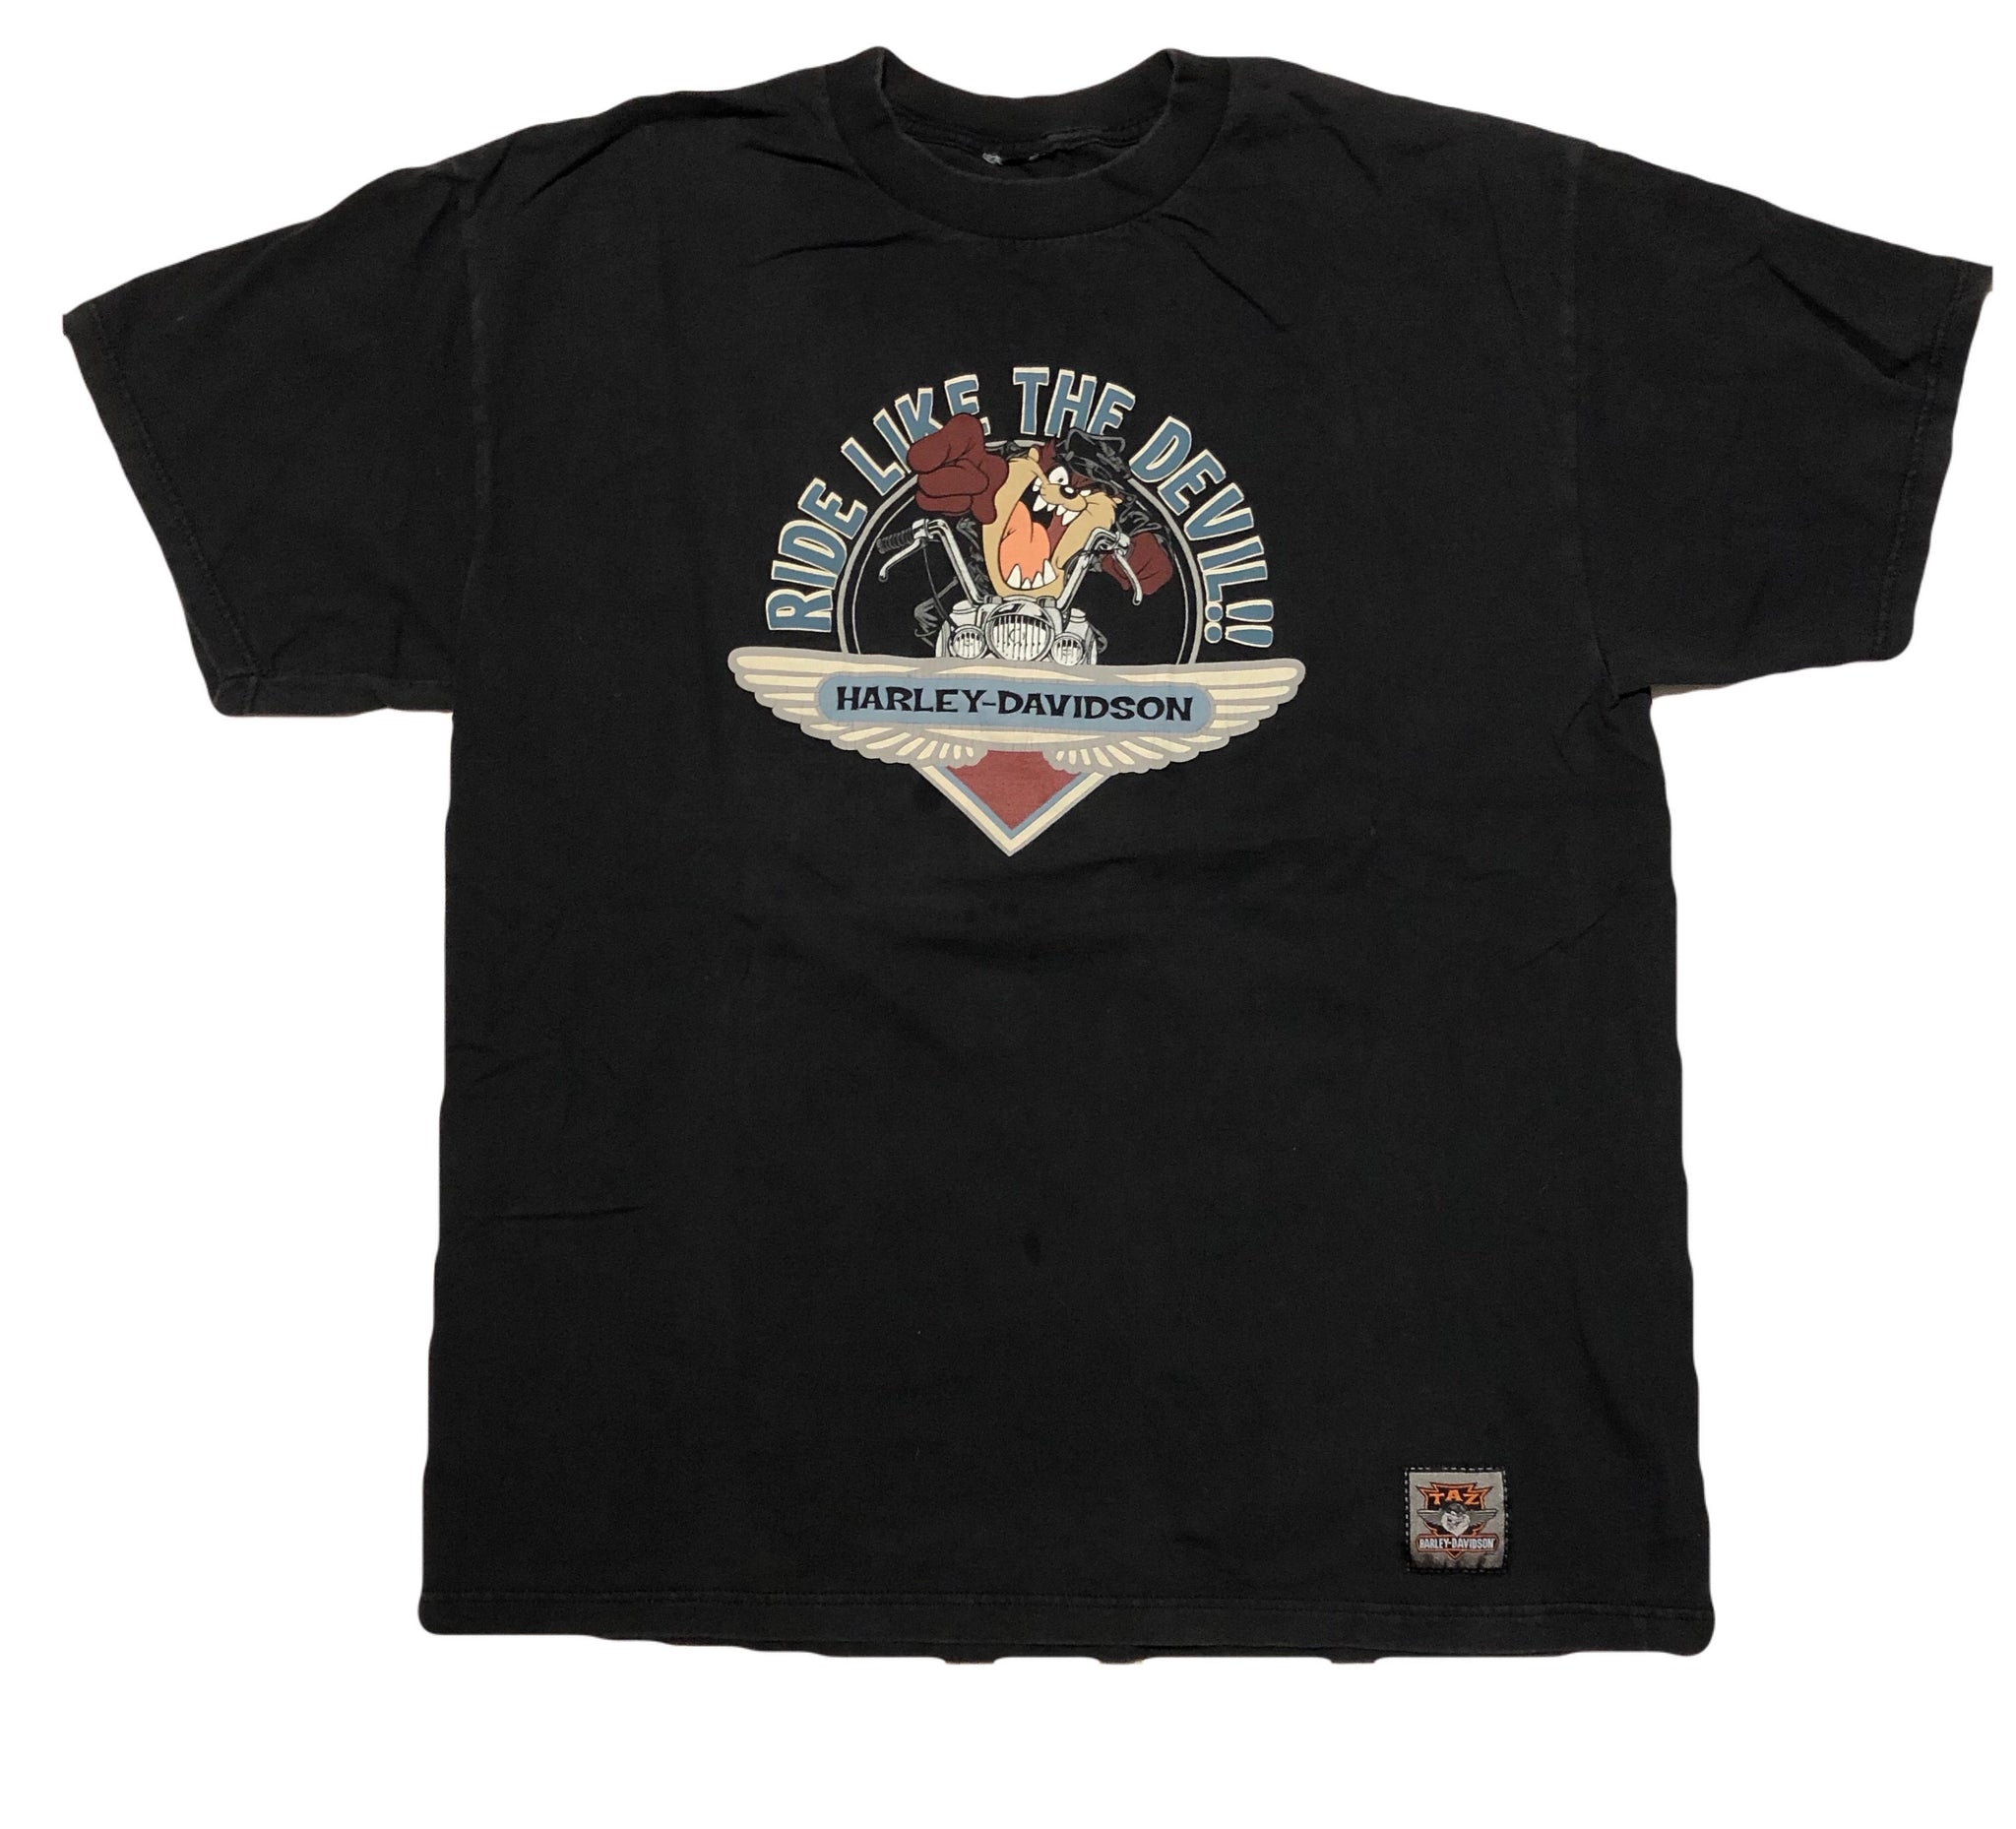 1993 Taz Rebel-Rider Warner Bros Vintage T-Shirt Size Large Black 90s